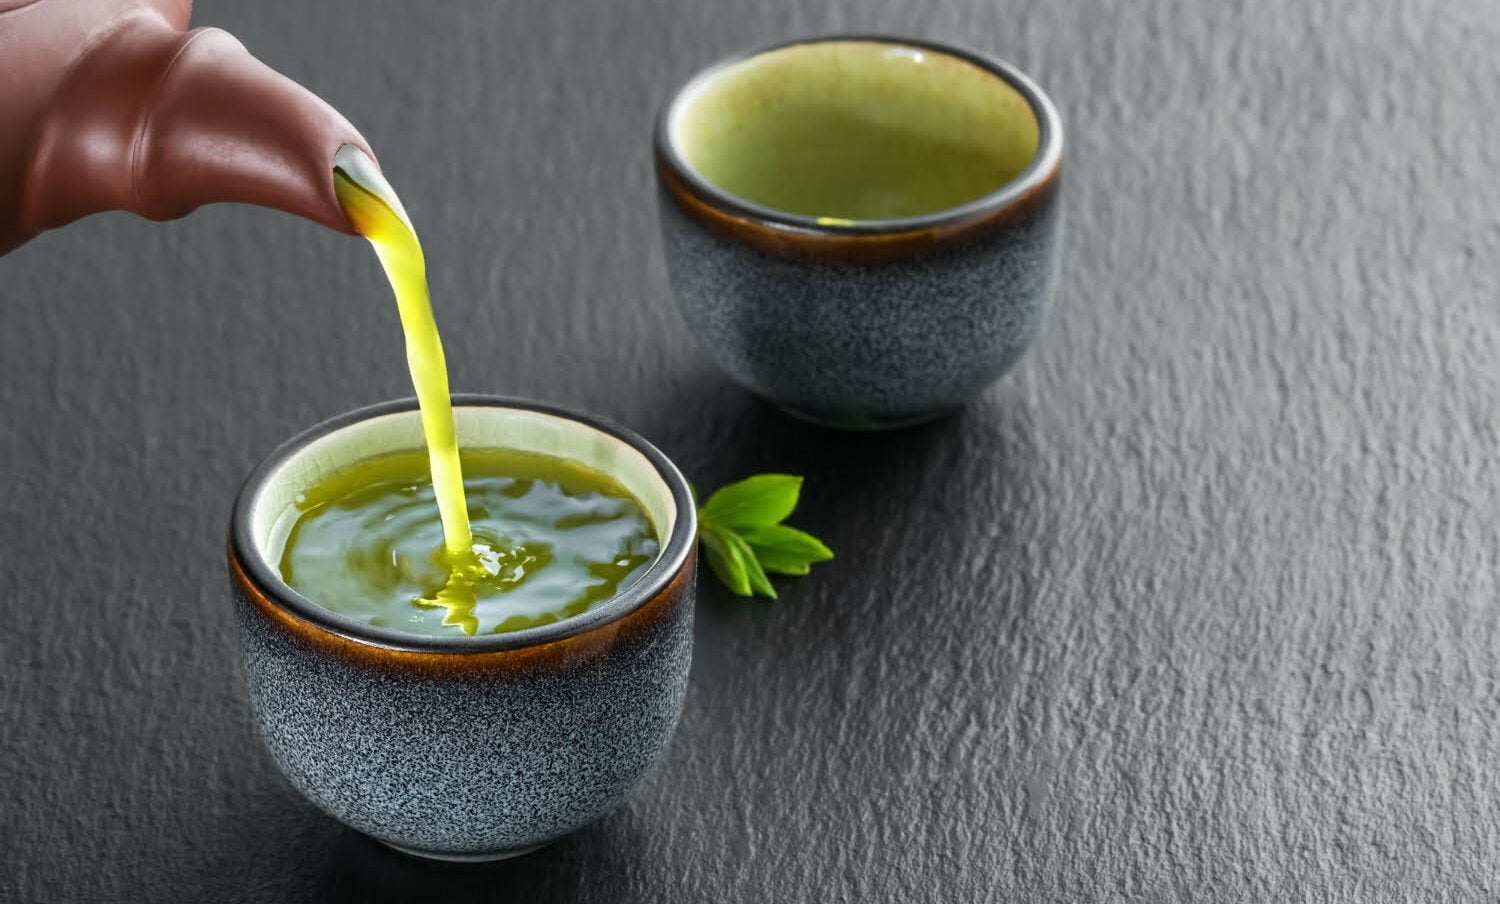 el té verde protege contra el cáncer de próstata / olor corporal